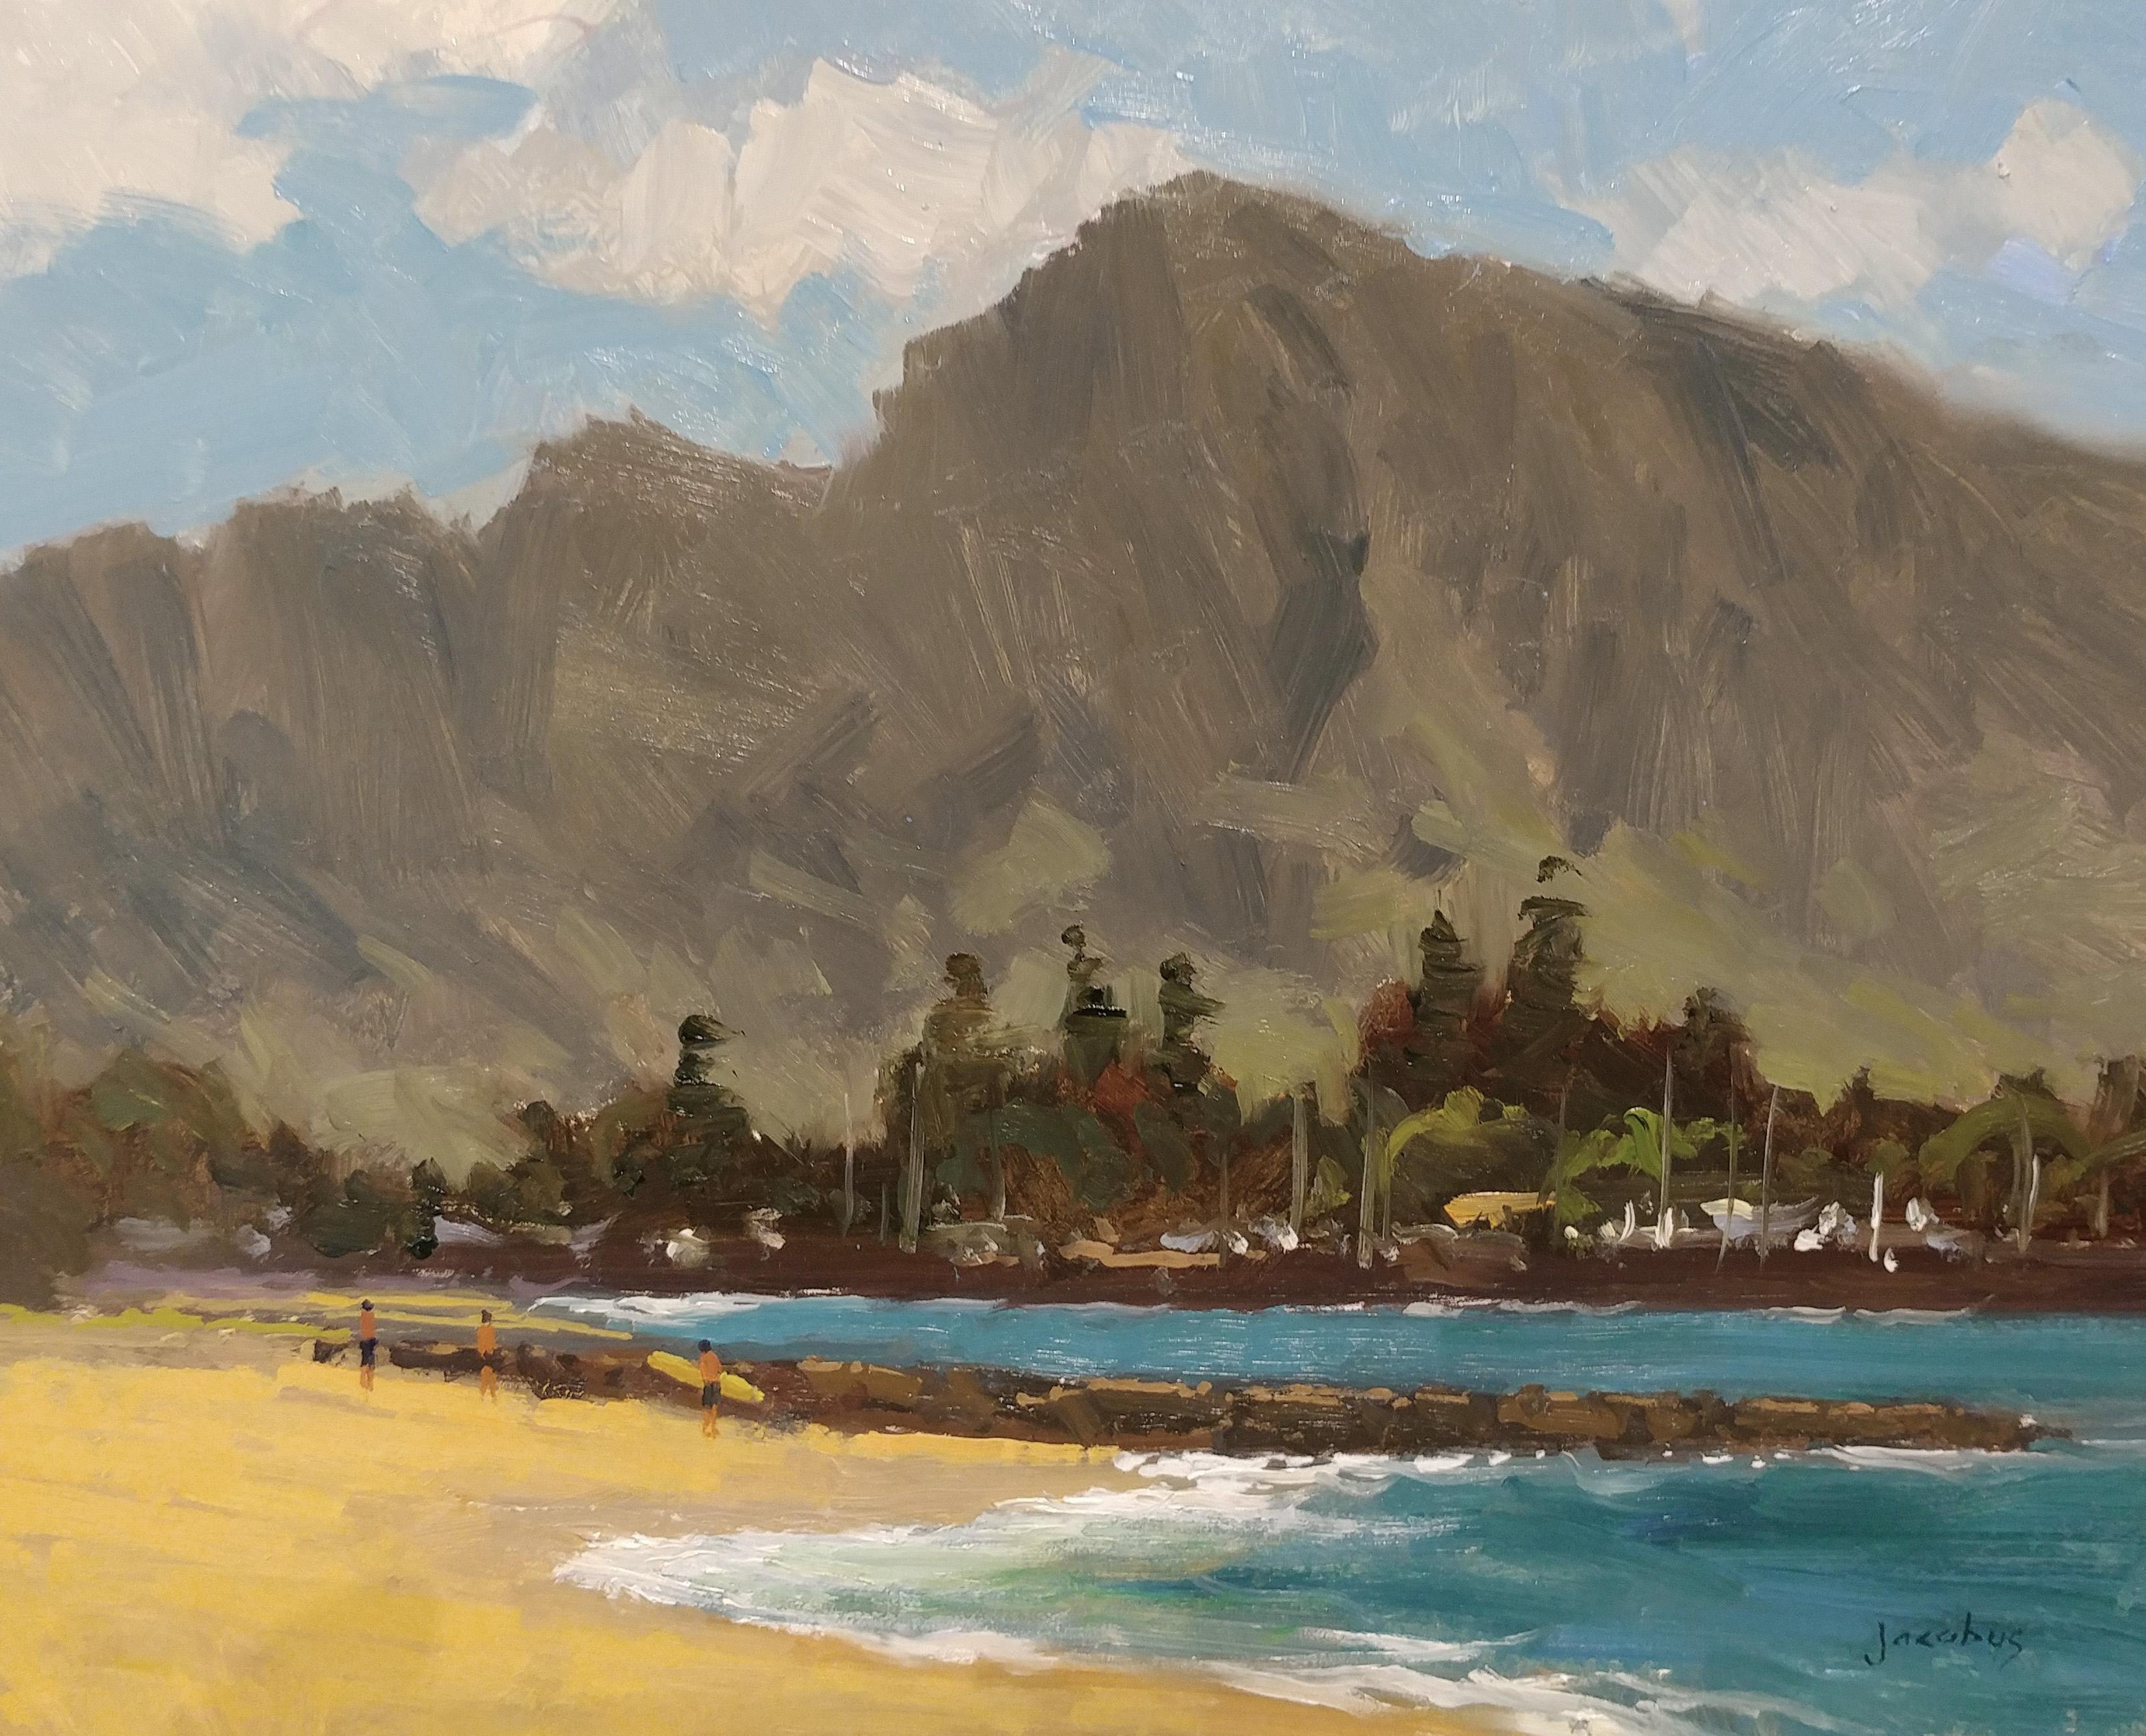 Jacobus Baas Landscape Painting - "Haleiwa Beach" North Shore Hawaii Plein Air Oil Painting 